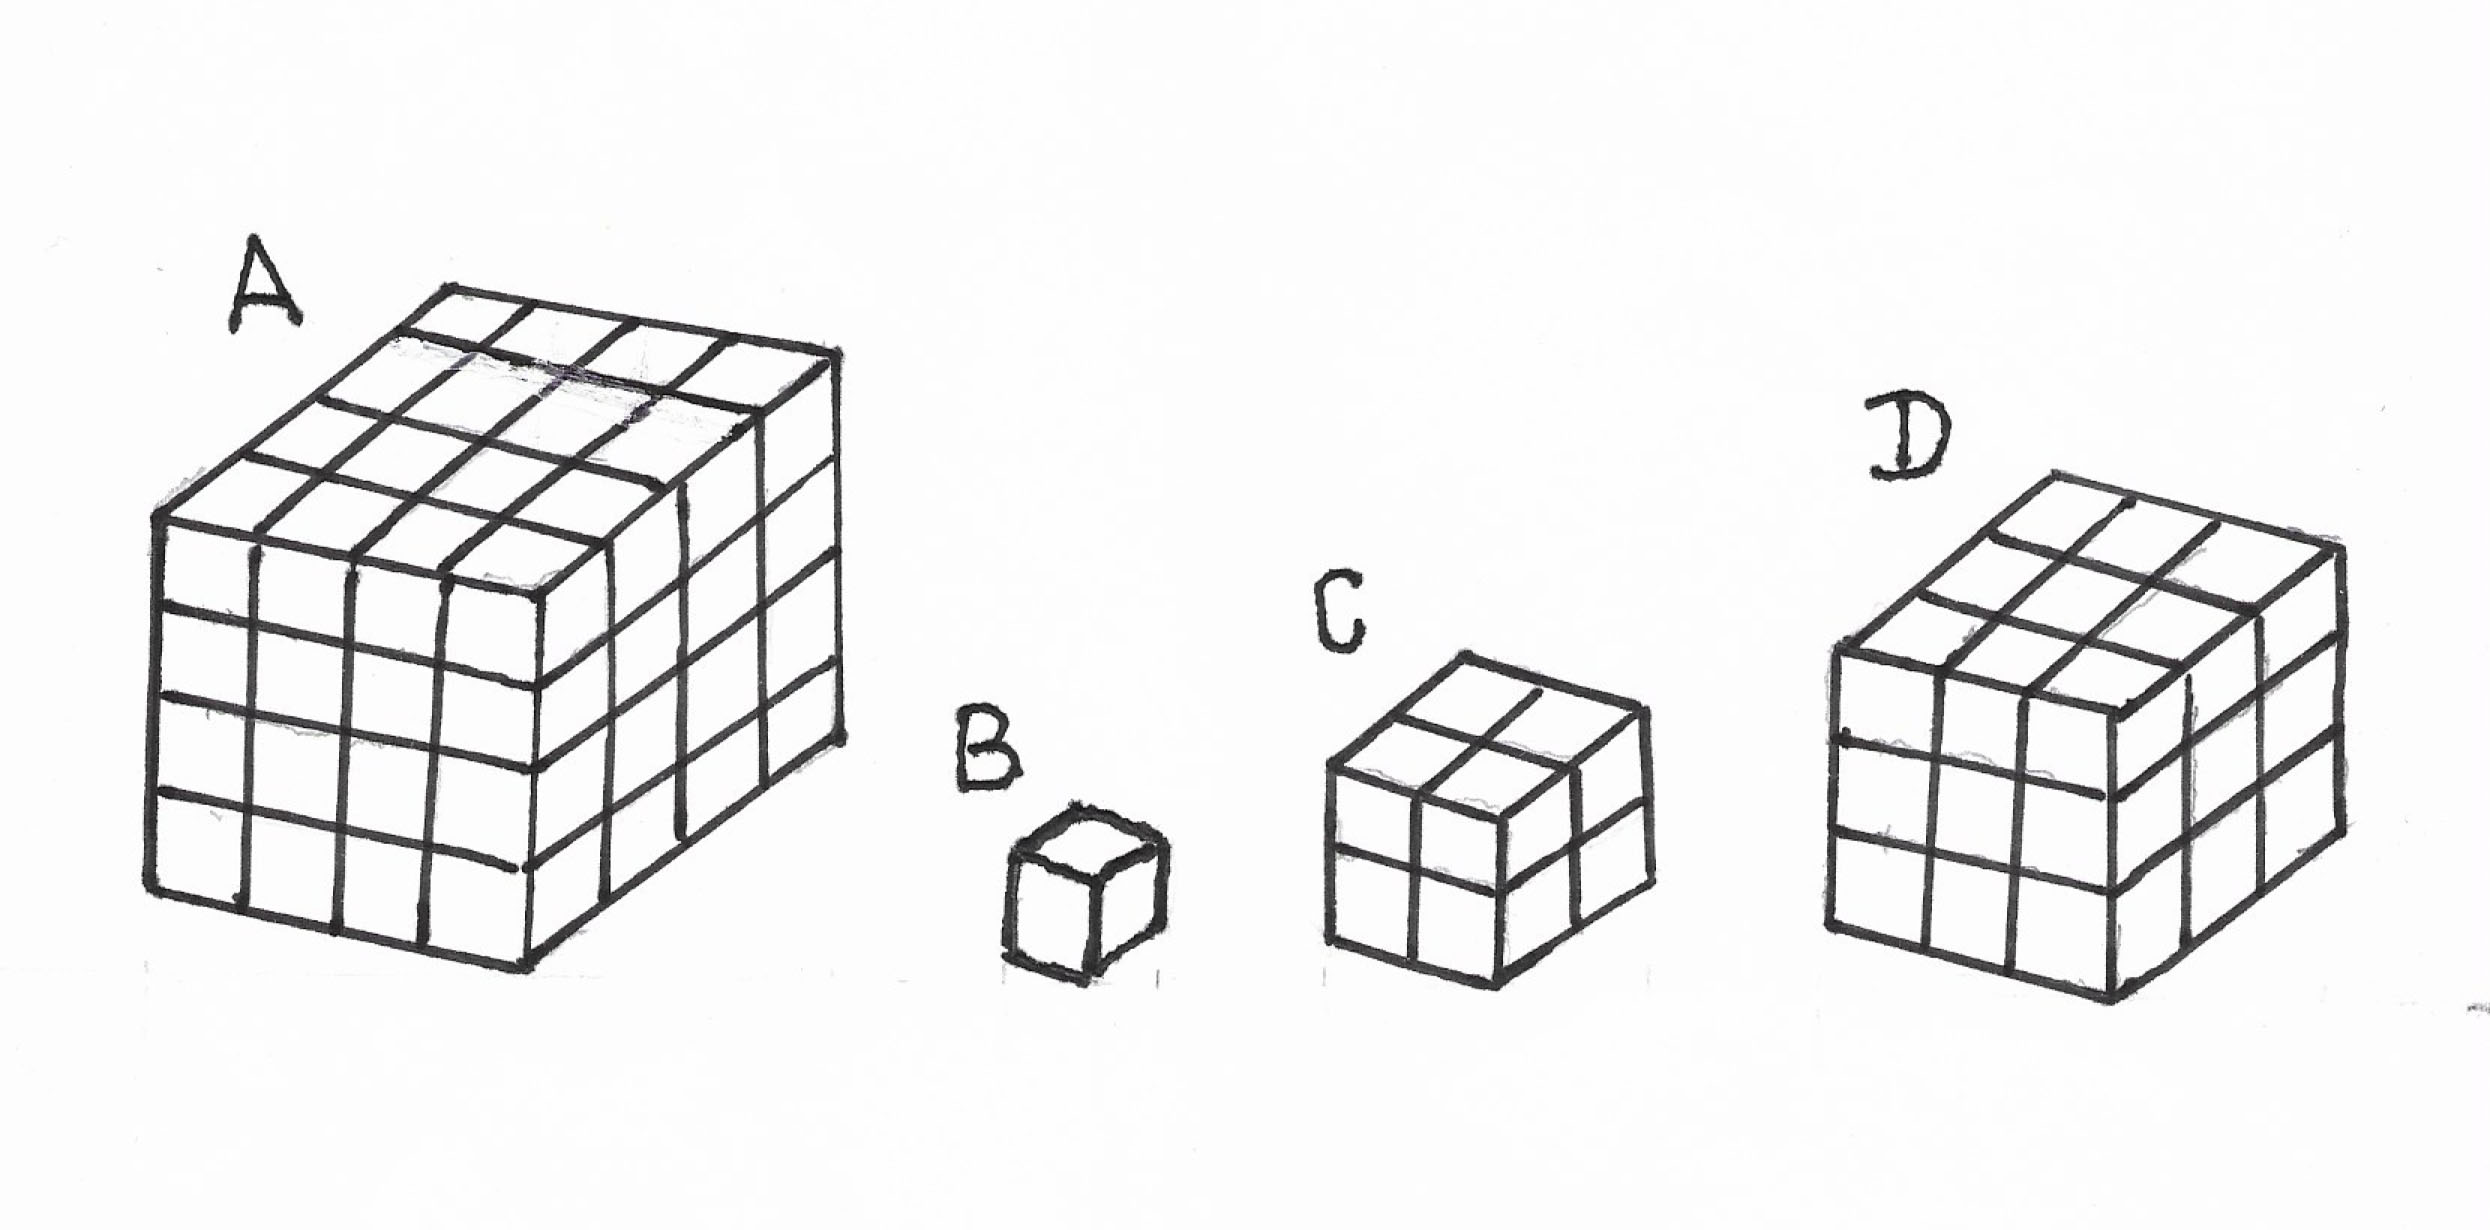 Фигуры из одинаковых кубиков. Игральный кубик развертка. Из одинаковых кубиков изобразили стороны коробки. Алгоритм собирания кубика Рубика 3x3.